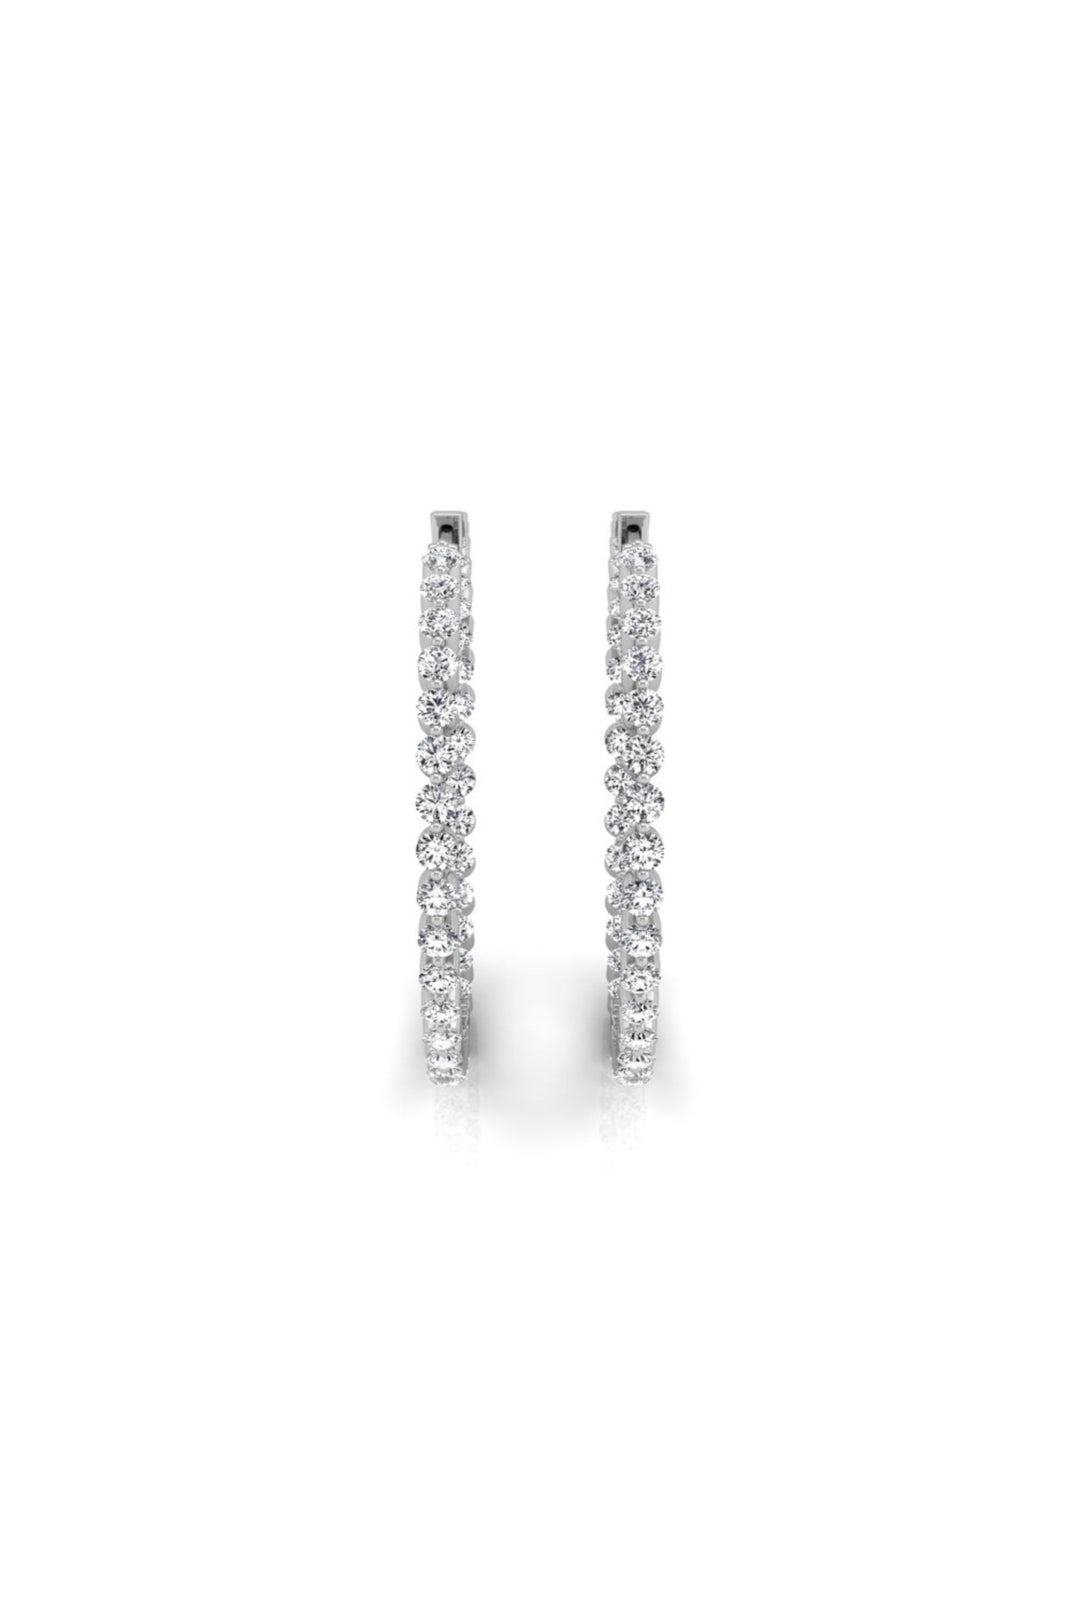 0.32Ct Round Cut Moissanite Hoops Diamond Earrings for Women